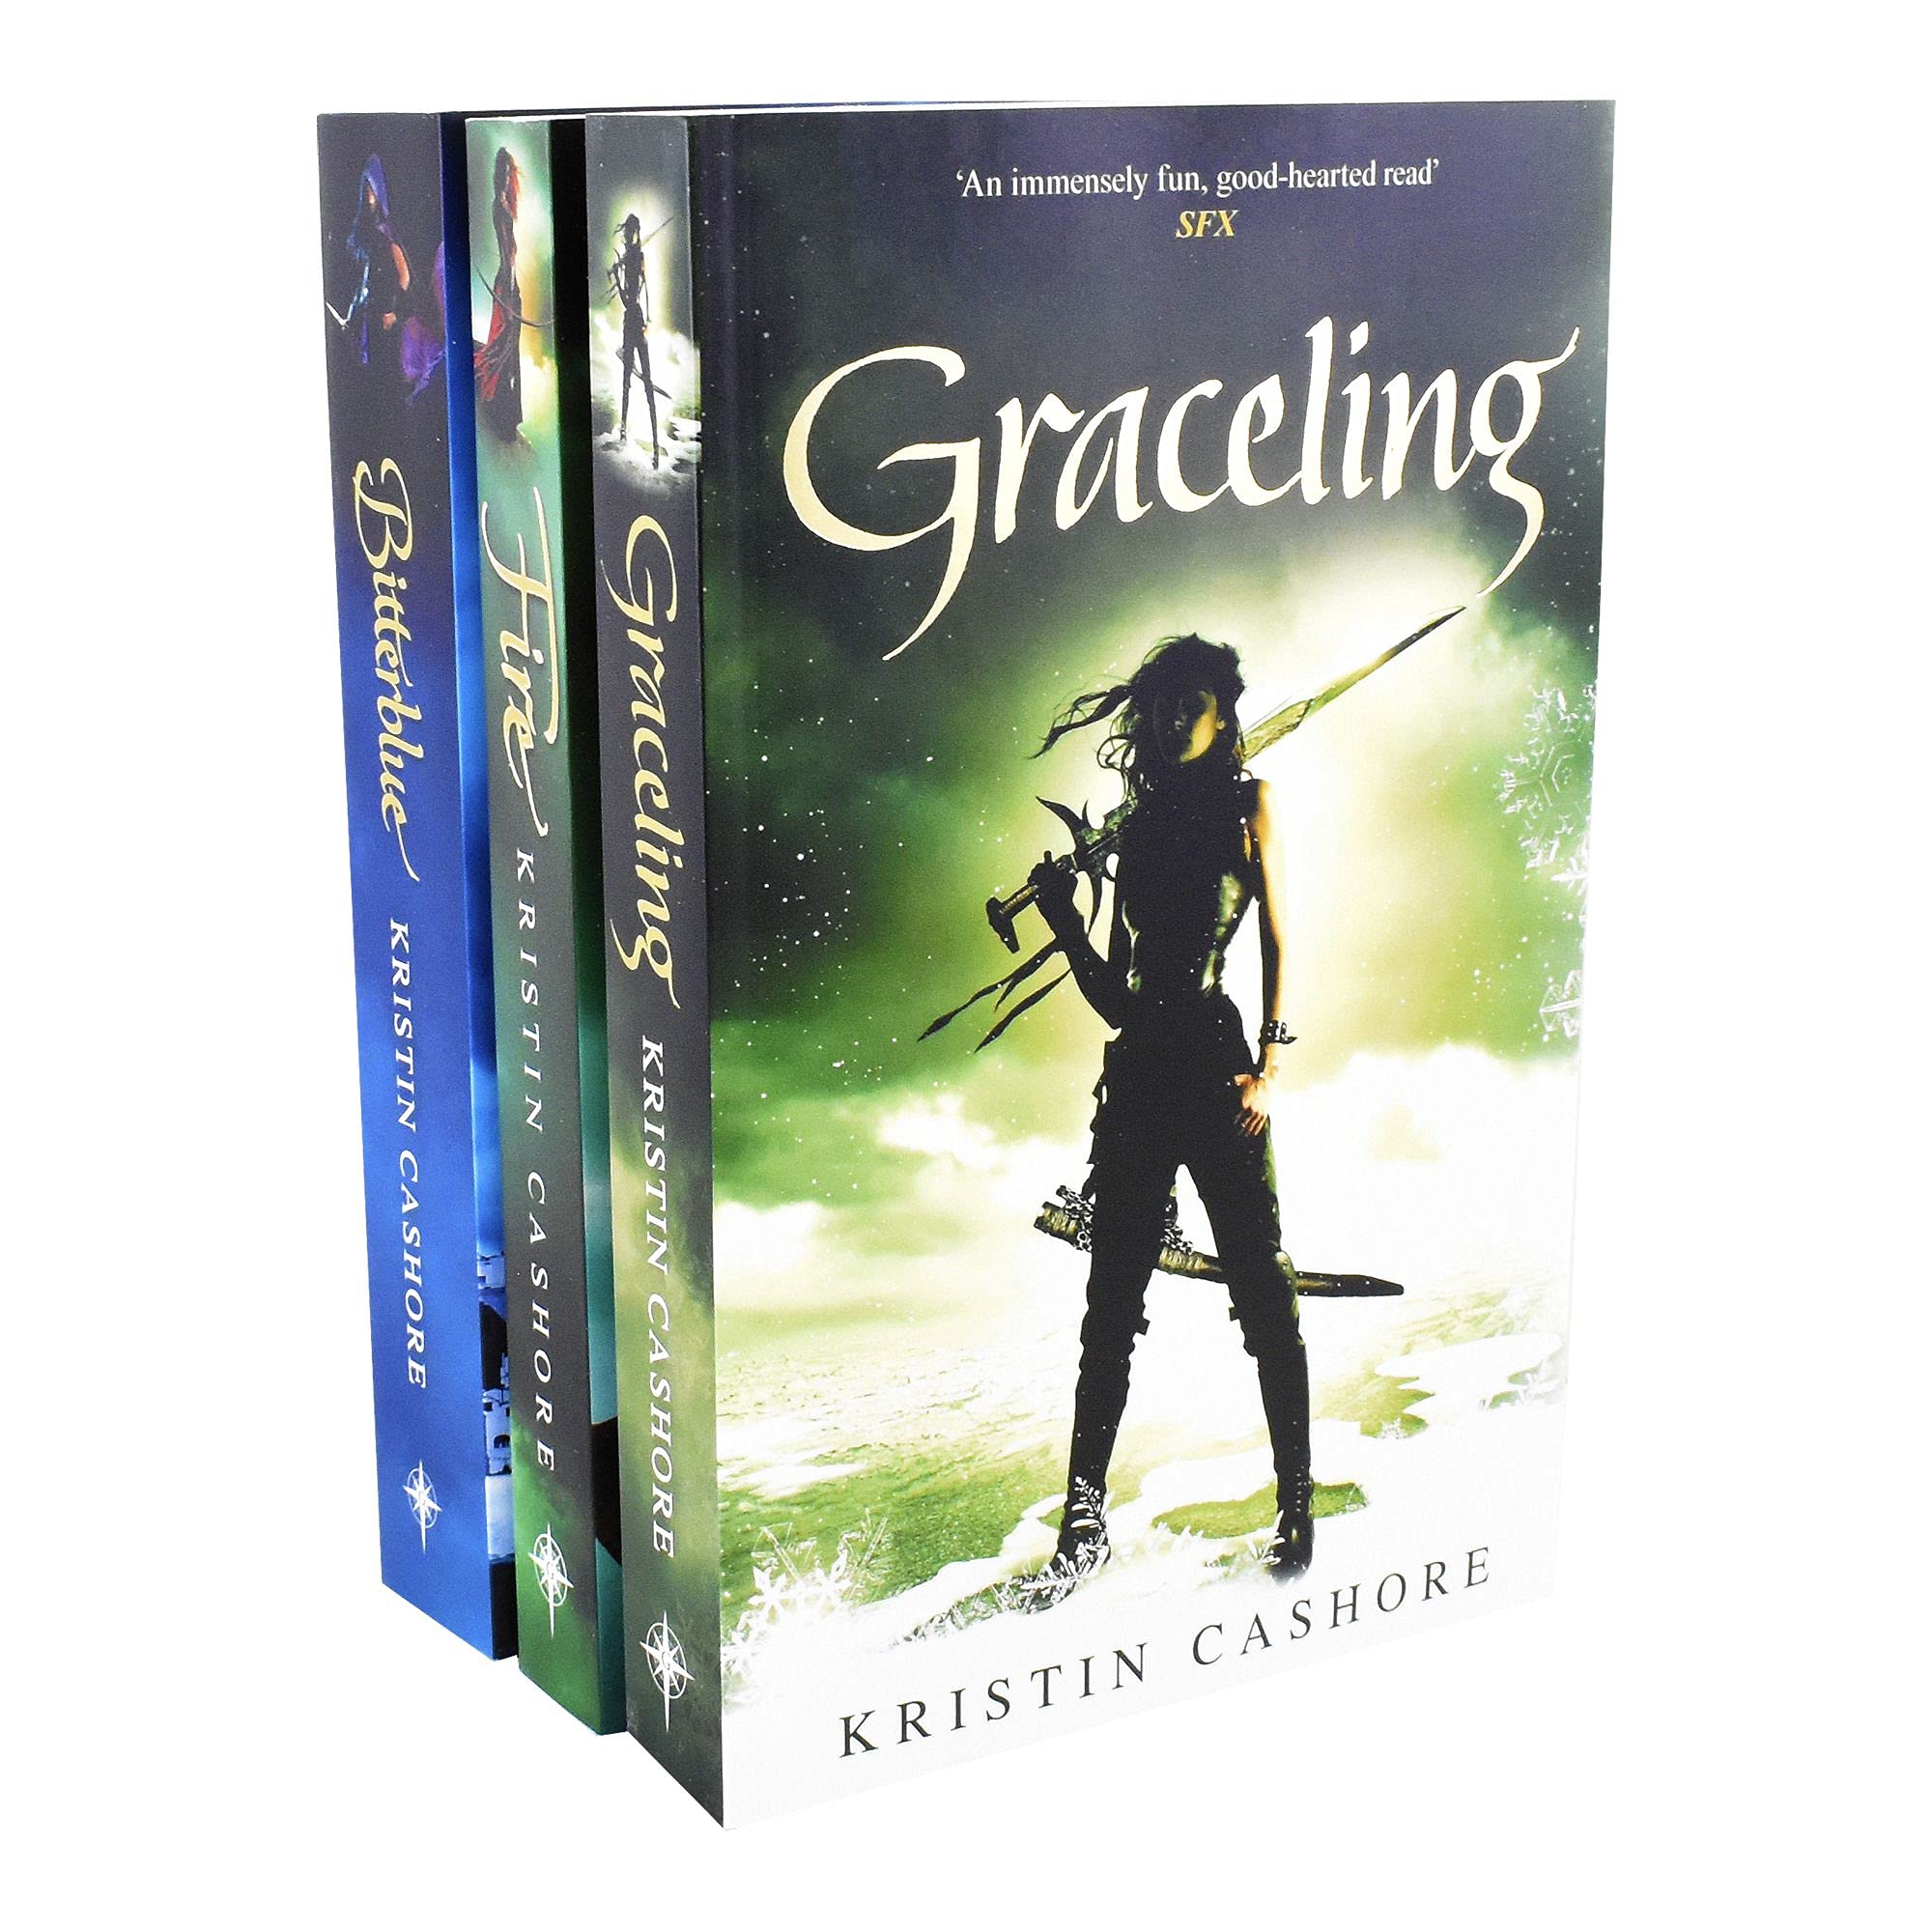 Graceling Realm Series 3 Books Complete Collection Set by Kristin Cashore, Graceling, Fire - Lets Buy Books